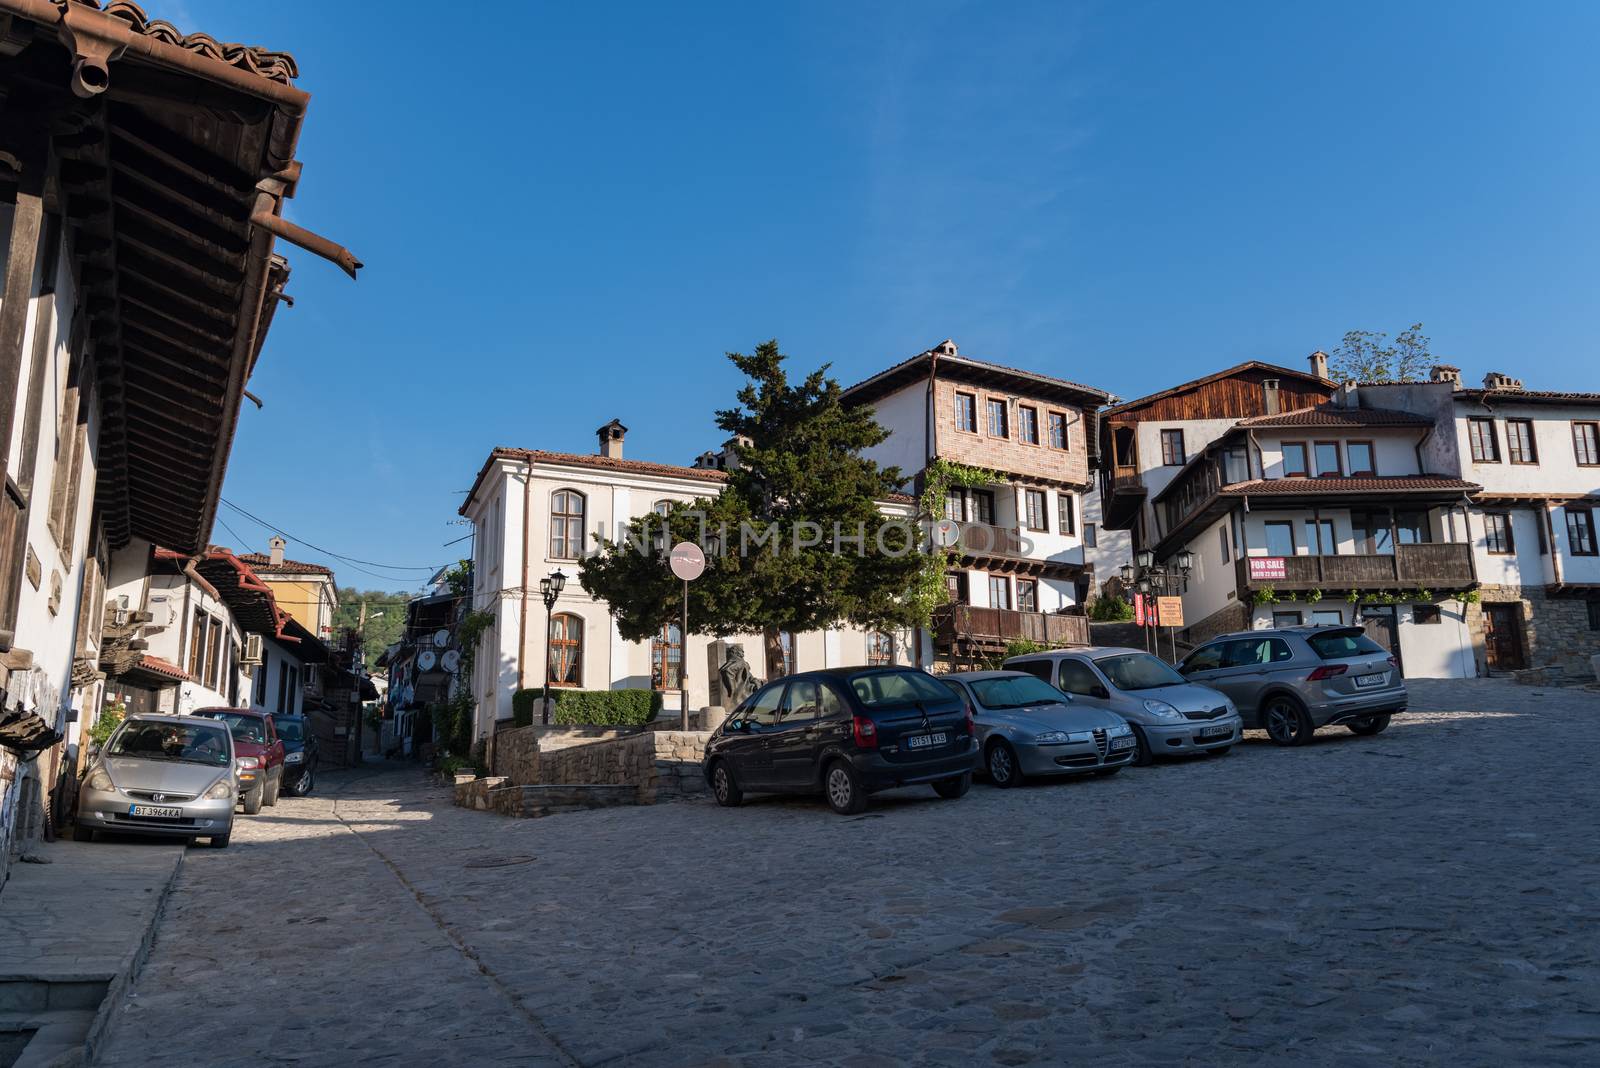 Veliko Tarnovo, Bulgaria - 8 may, 2019: Traditional houses city center of medieval town of Veliko Tarnovo